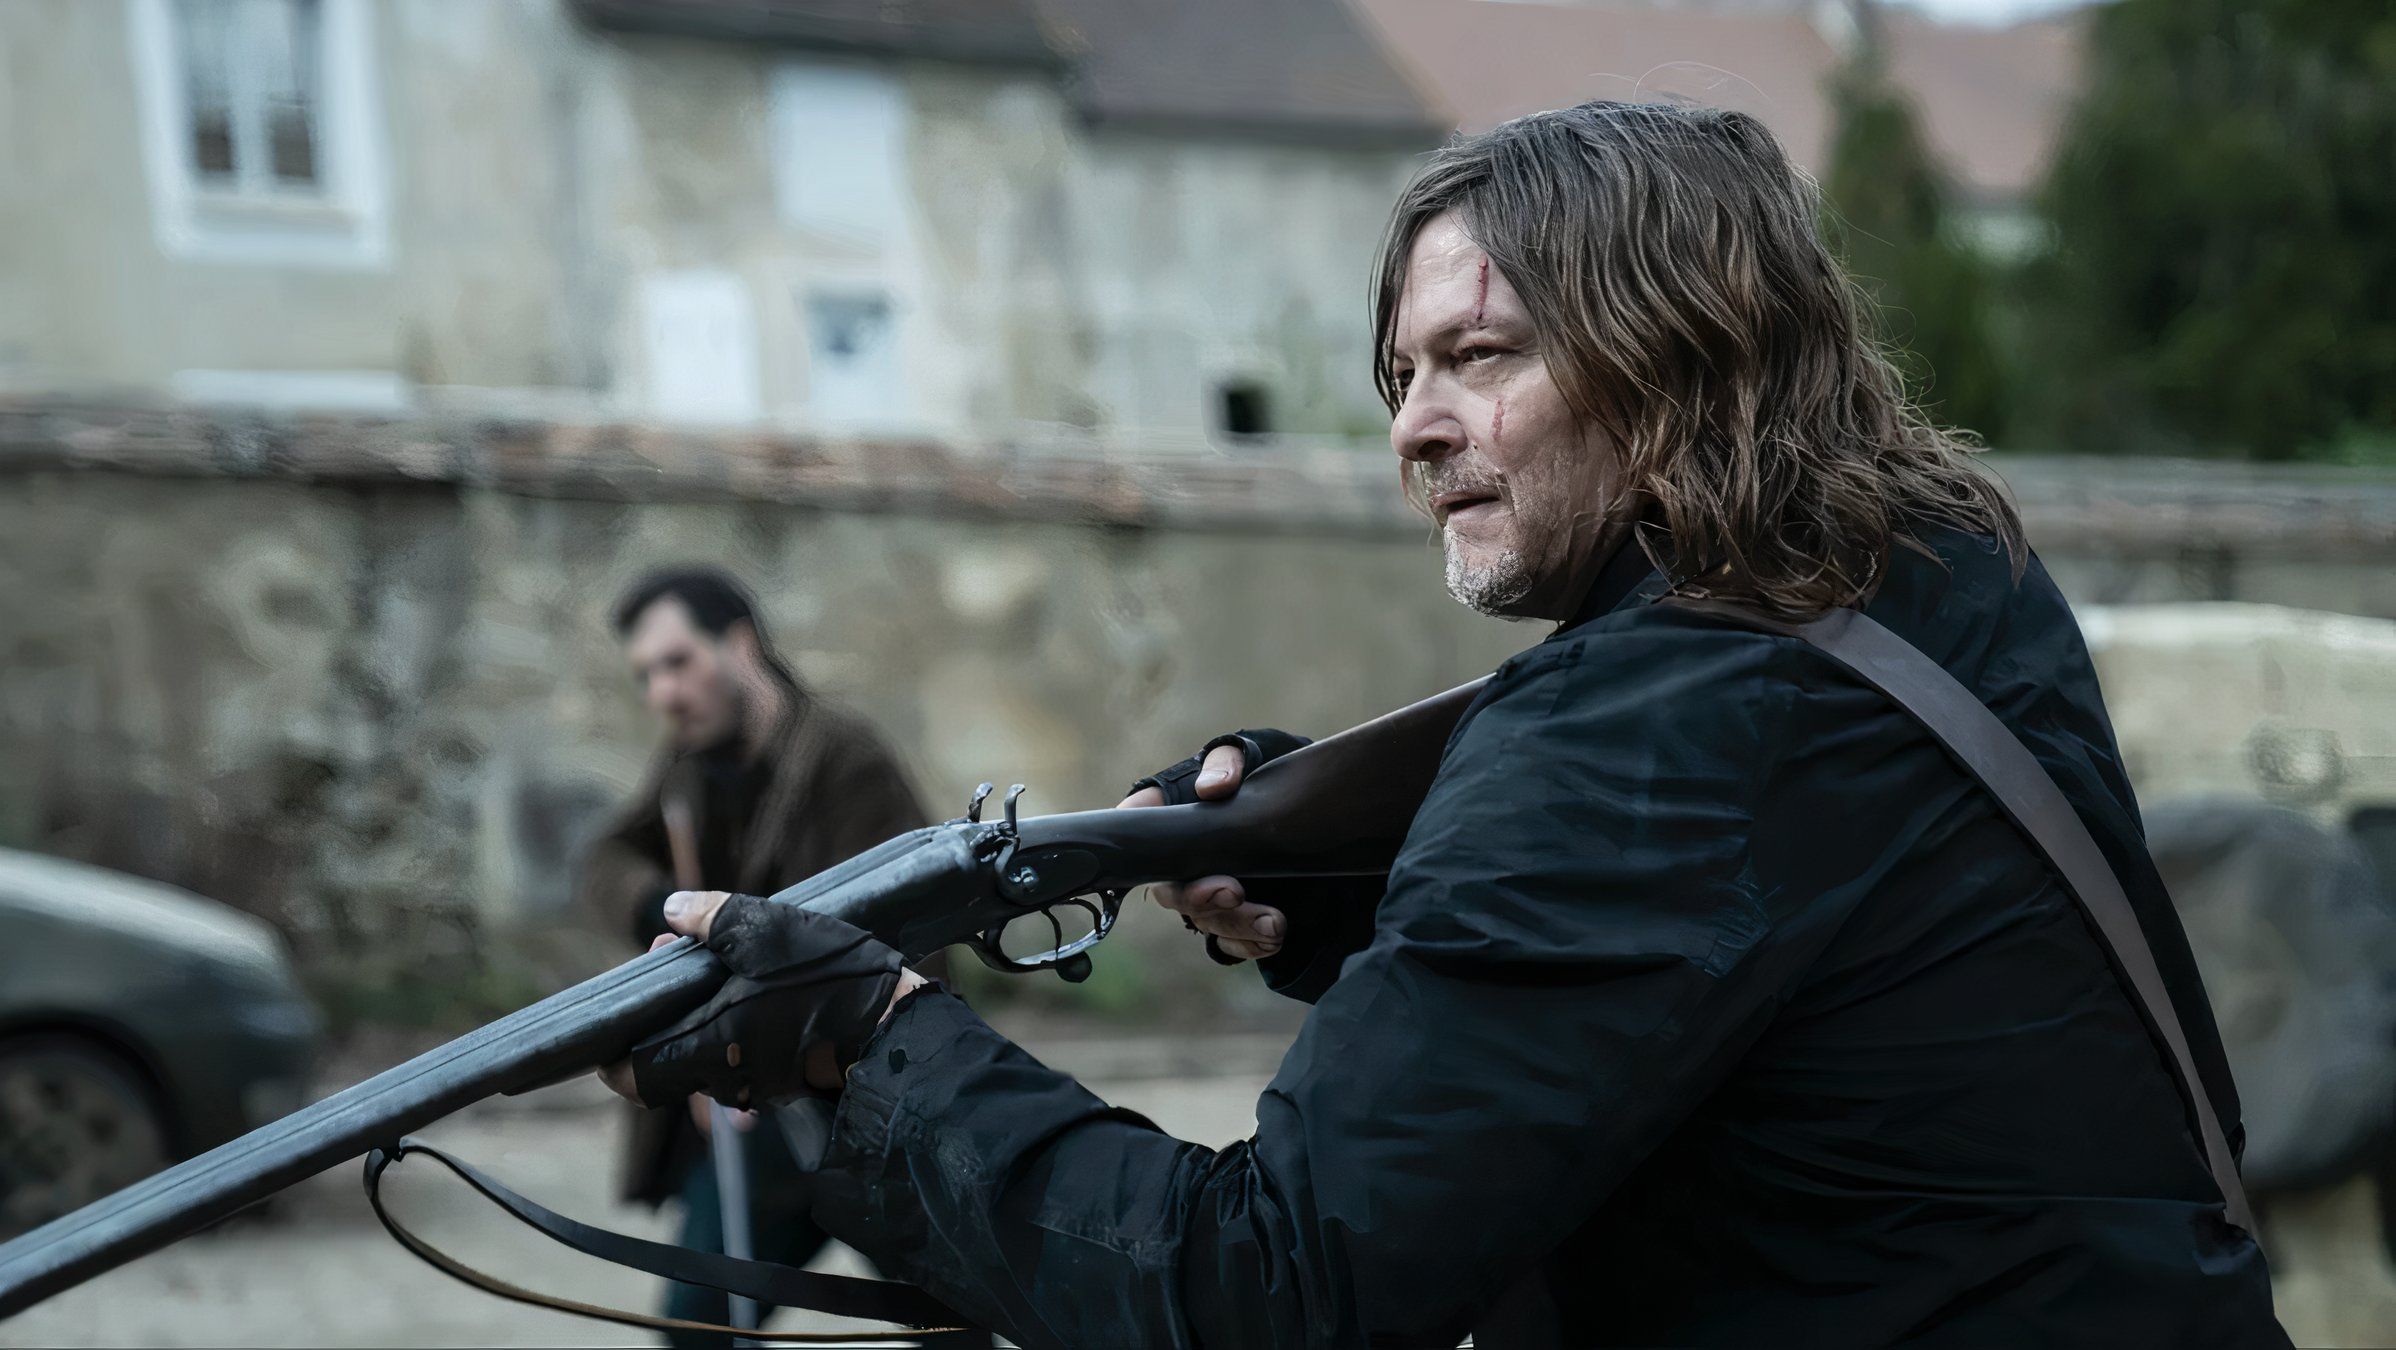 Norman Reedus as Daryl with a shotgun in The Walking Dead Daryl Dixon season 2